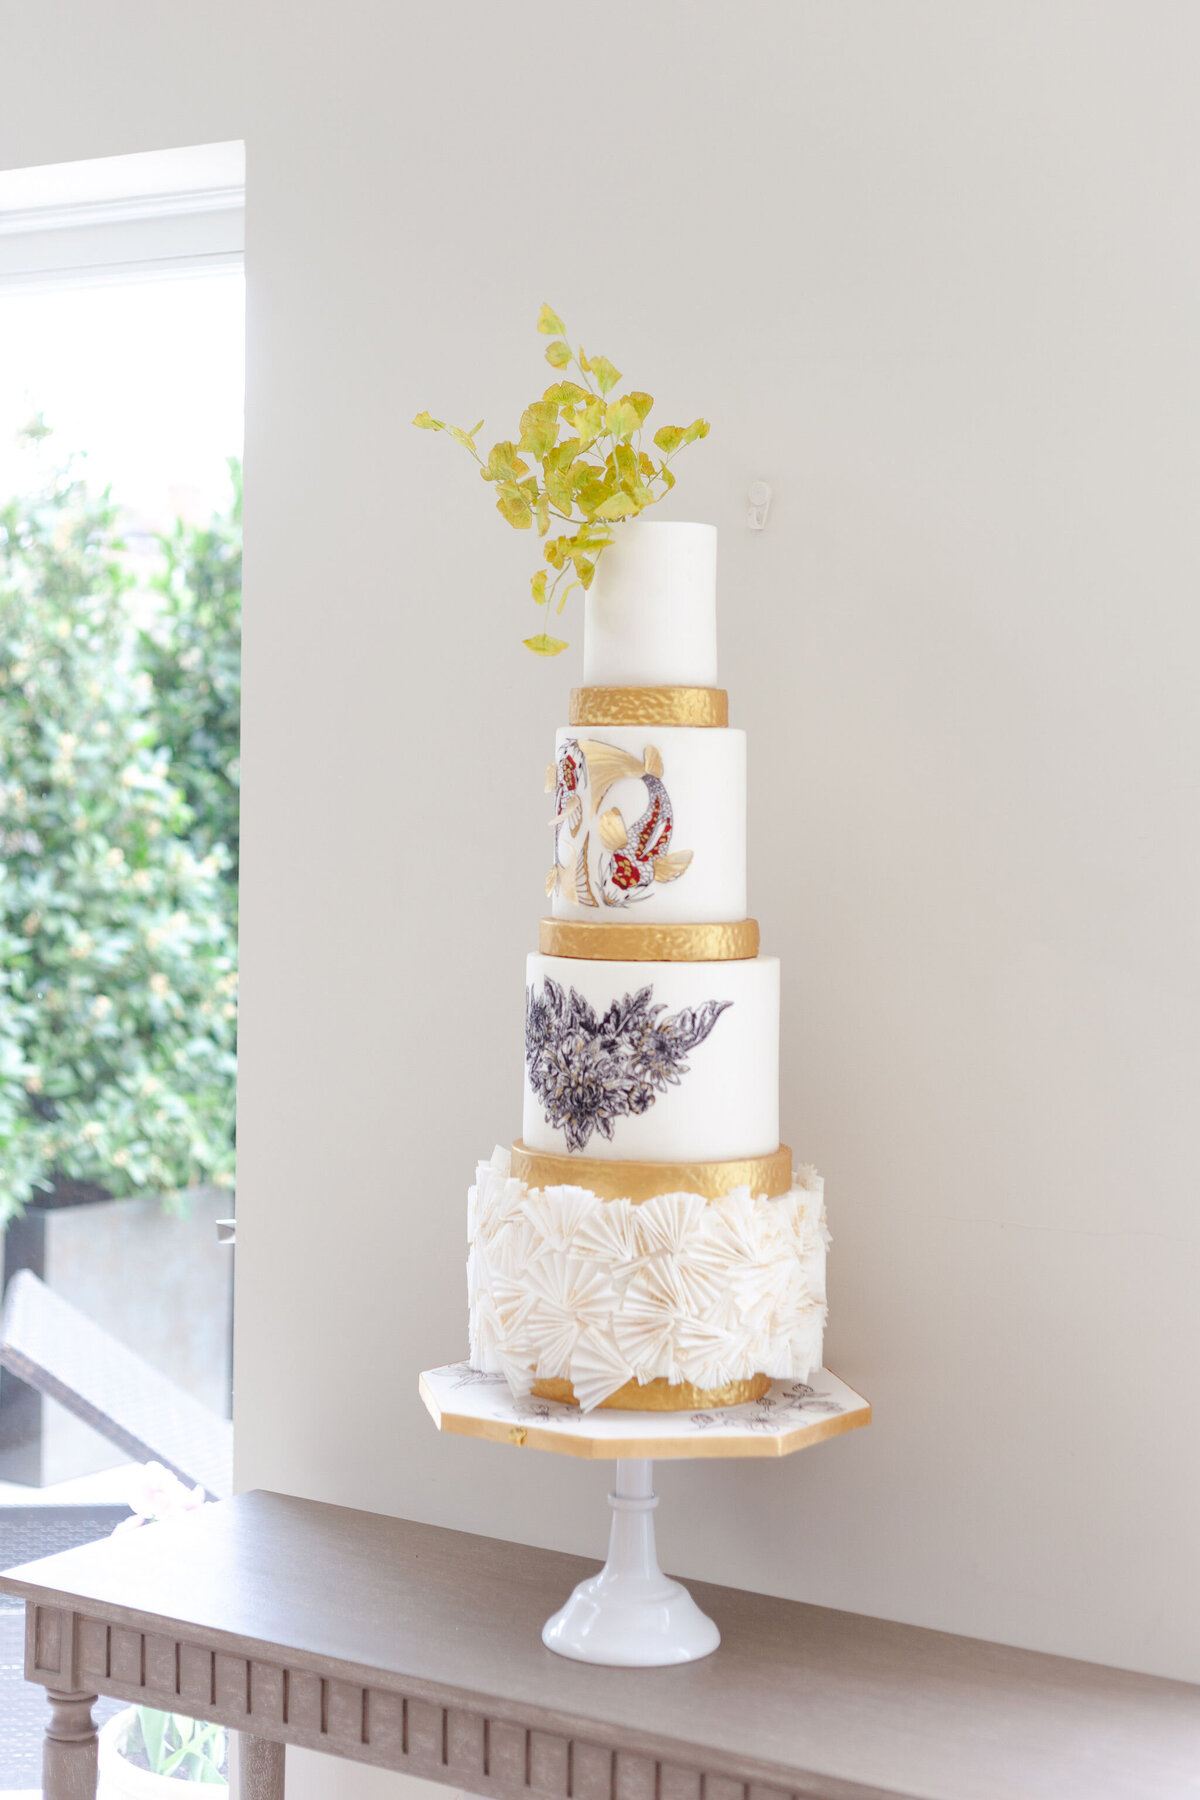 Luxury nature inspired wedding cake designer vanilla Spice Cake Studio Northamptonshire 4 tier hand painted sugar flower cake with modern textured ruffles